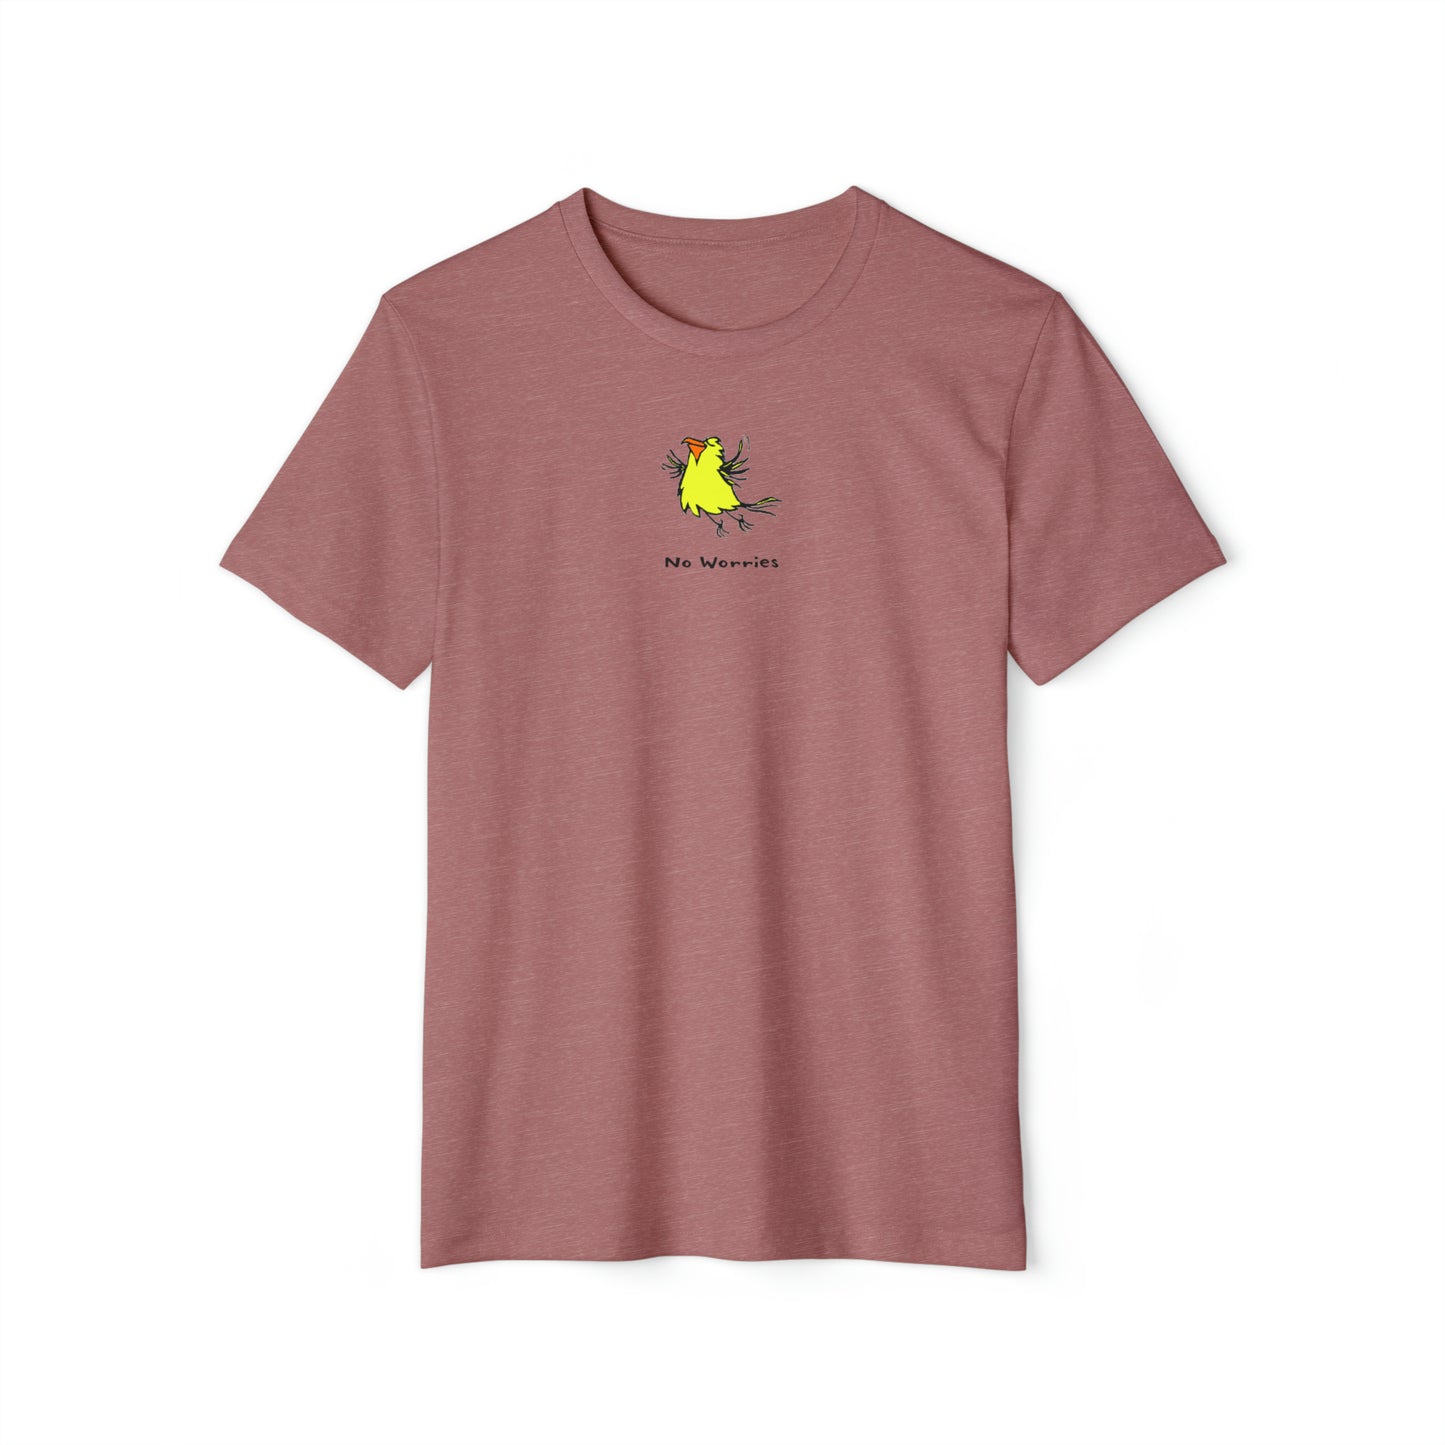 Yellow flying bird with orange beak on heather mauve red color unisex men's t-shirt. Text under image says No Worries